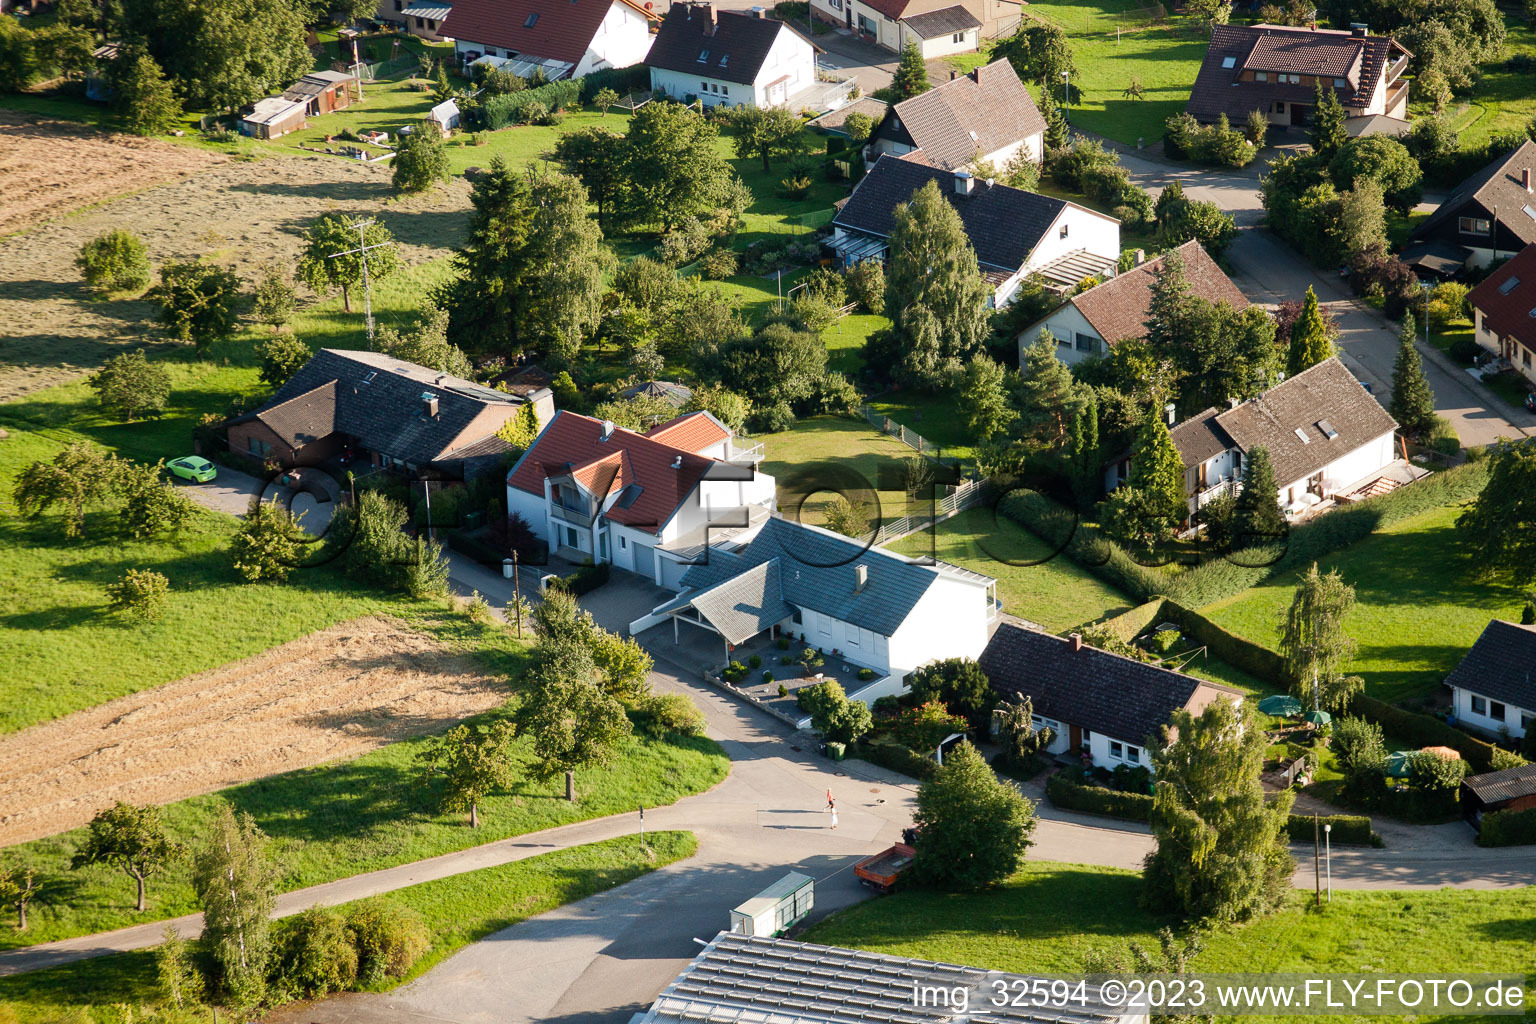 Aerial view of Gräfenhausen in the state Baden-Wuerttemberg, Germany